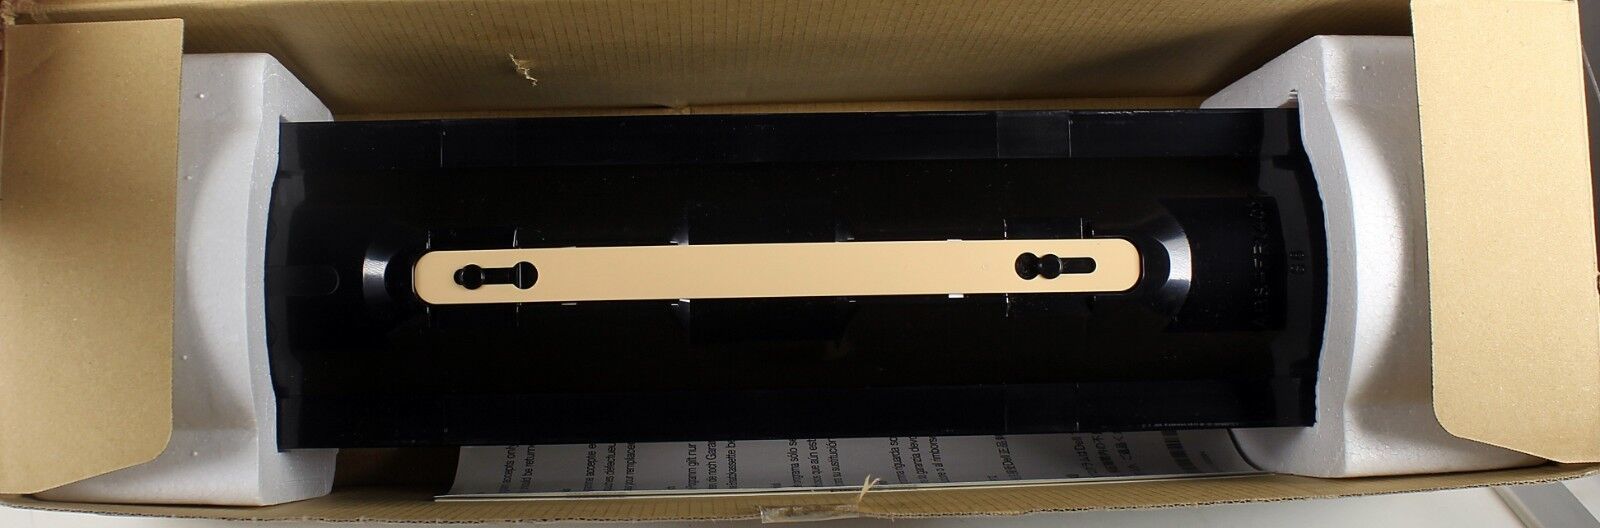 Genuine Dell X730H Black Toner Cartridge New open box 7330 laser printer - $24.74